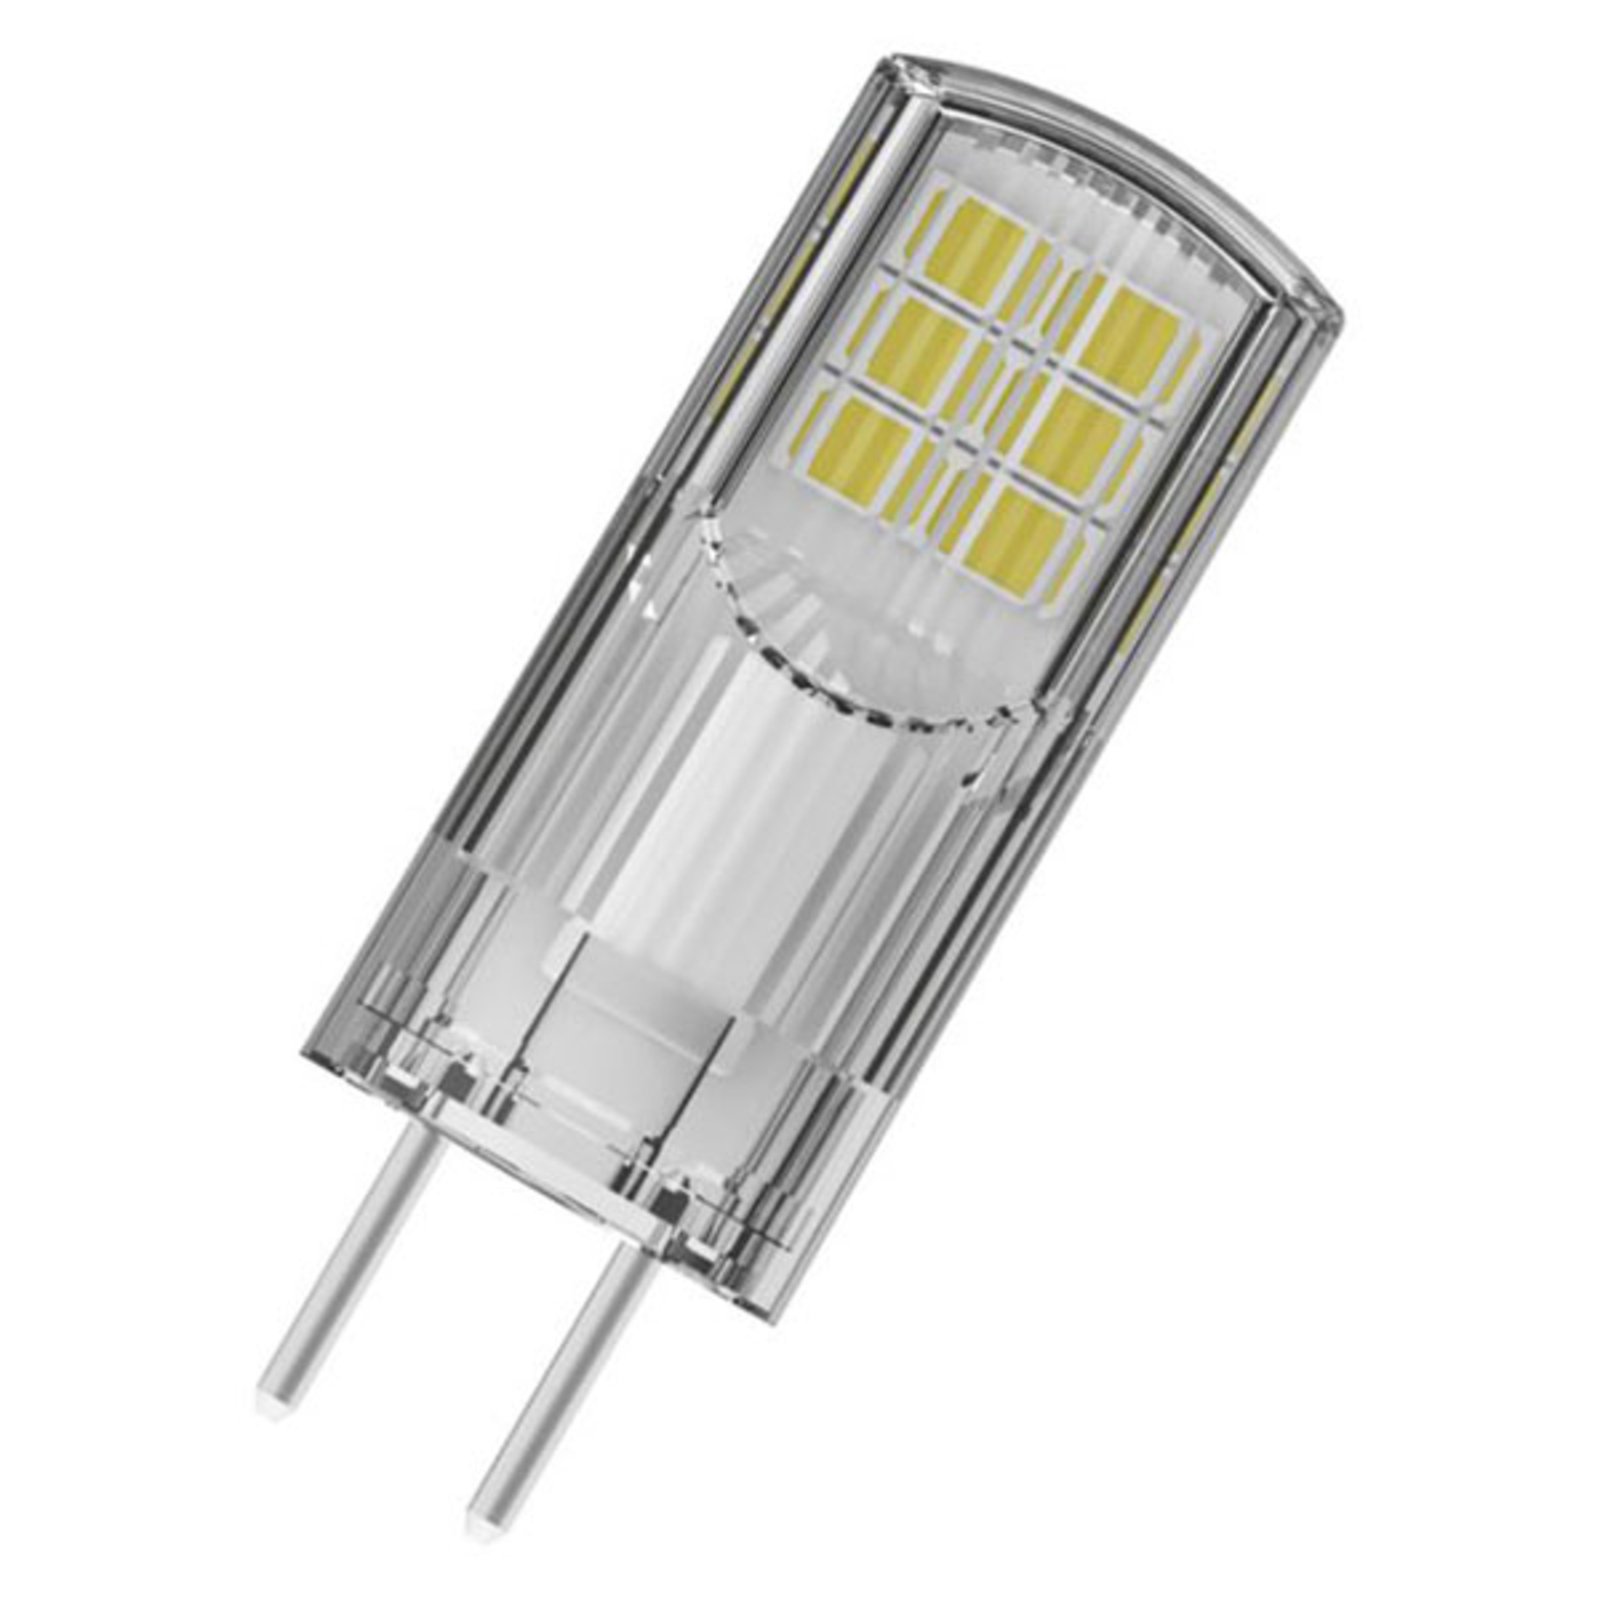 OSRAM LED žárovka GY6,35 2,6W, teplá bílá, 300 lm